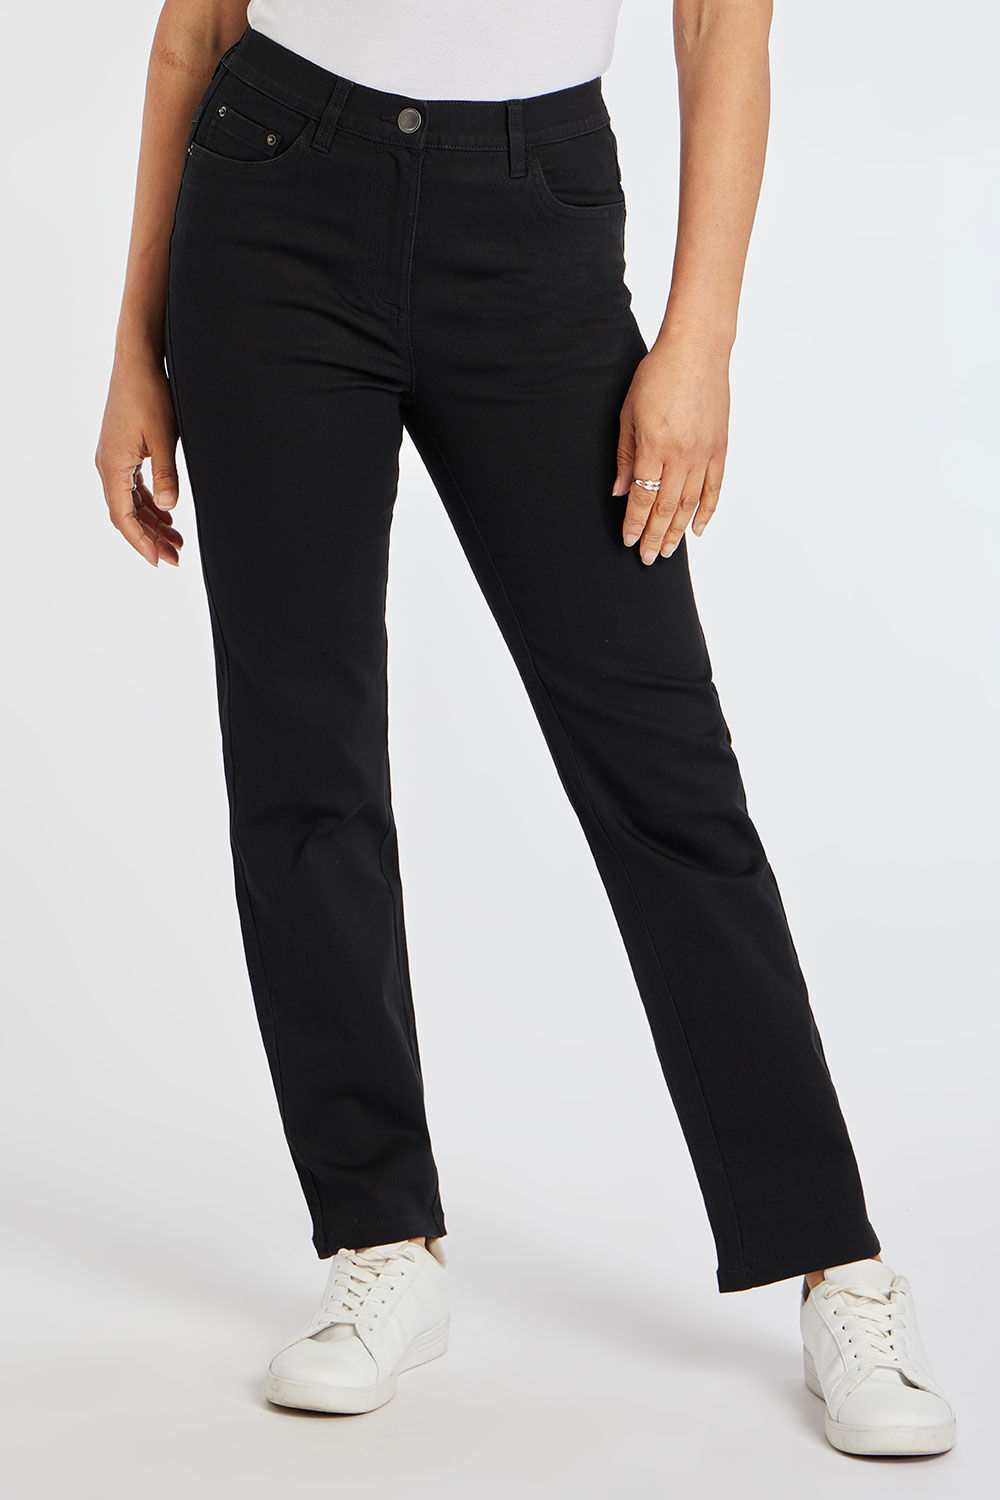 Bonmarche Women’s Black Cotton Casual The SARA Straight Leg Jeans, Size: 14